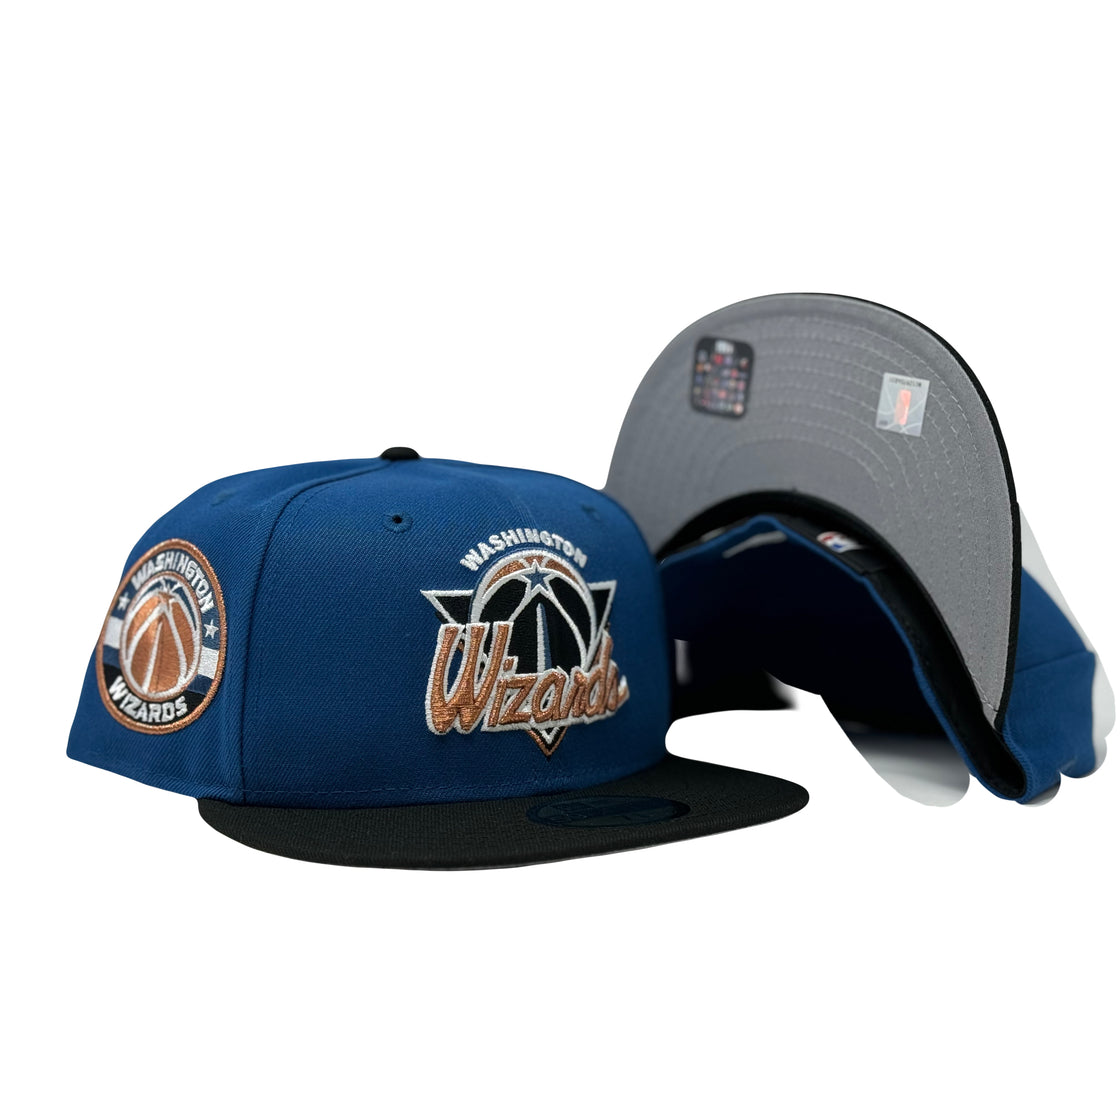 Washington Wizards 5950 New Era Fitted Hat